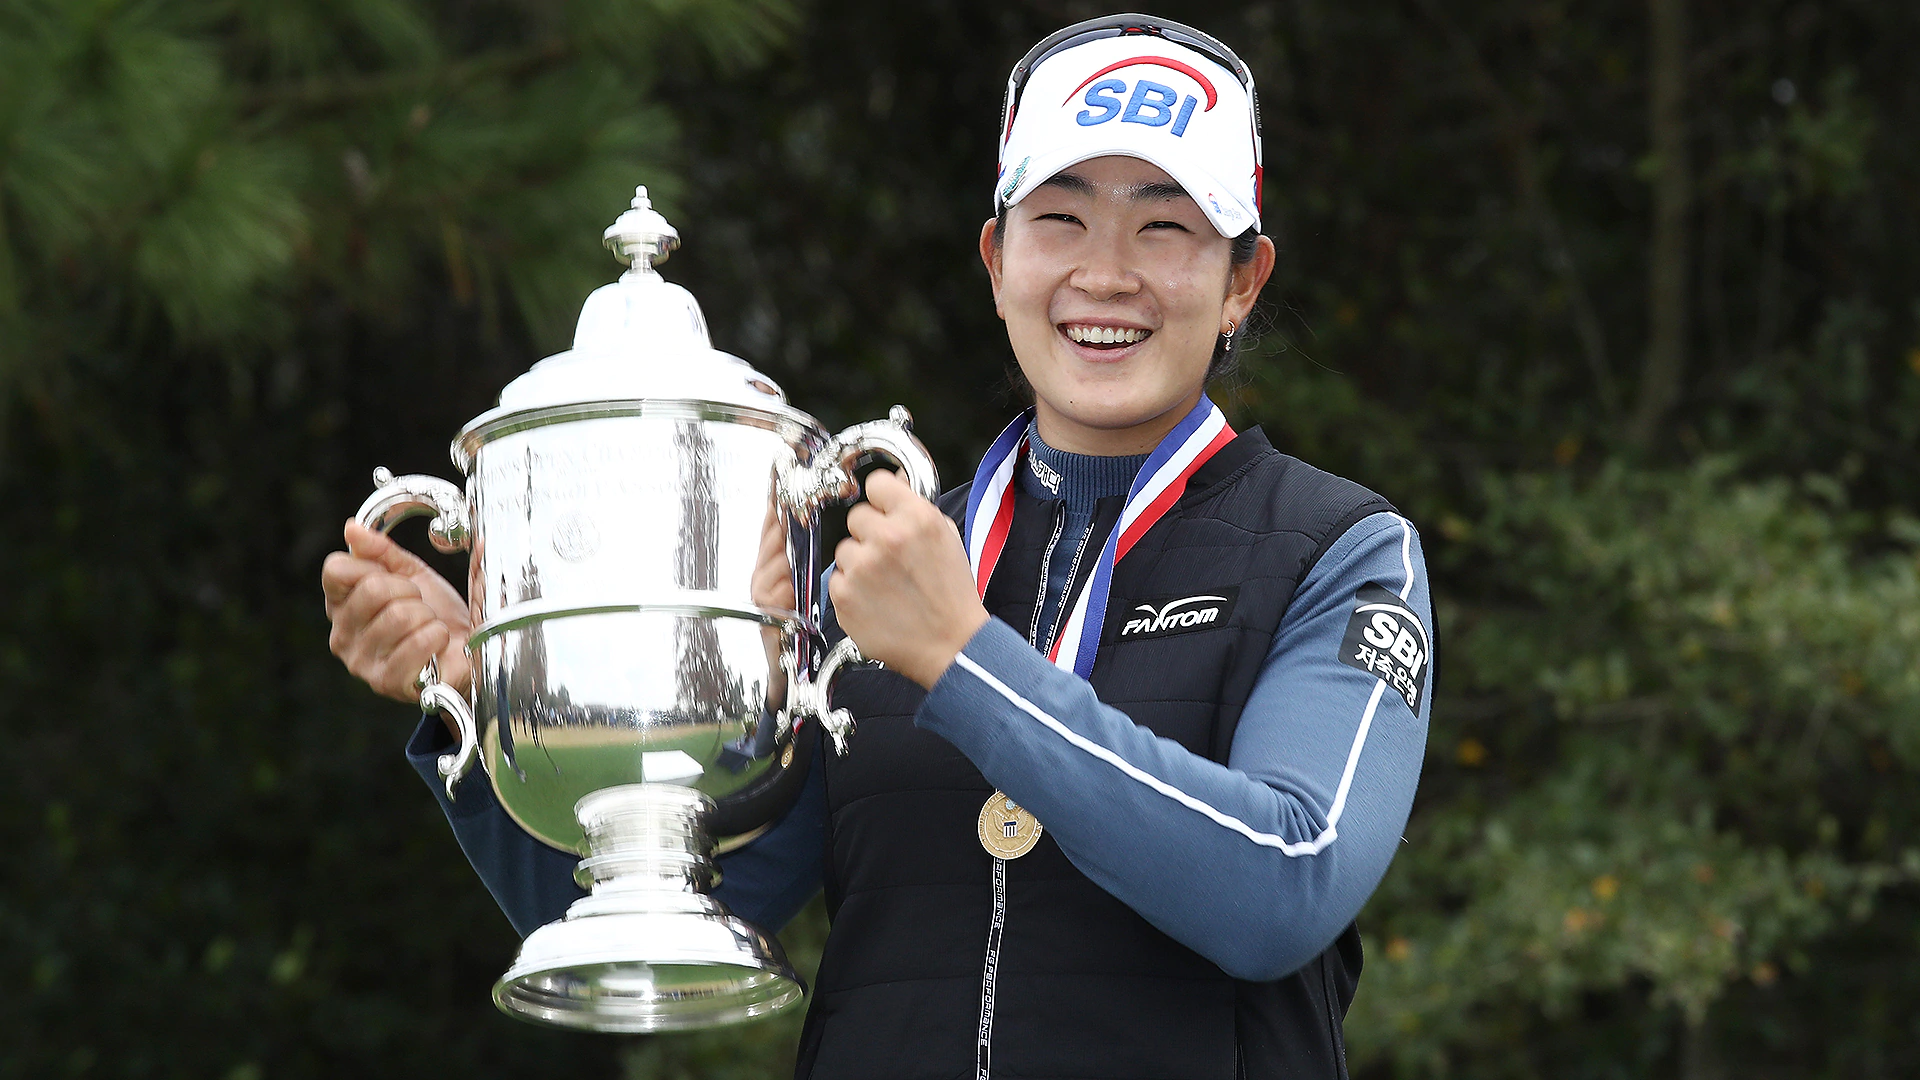 A Lim Kim birdies final three holes to win U.S. Women’s Open in debut